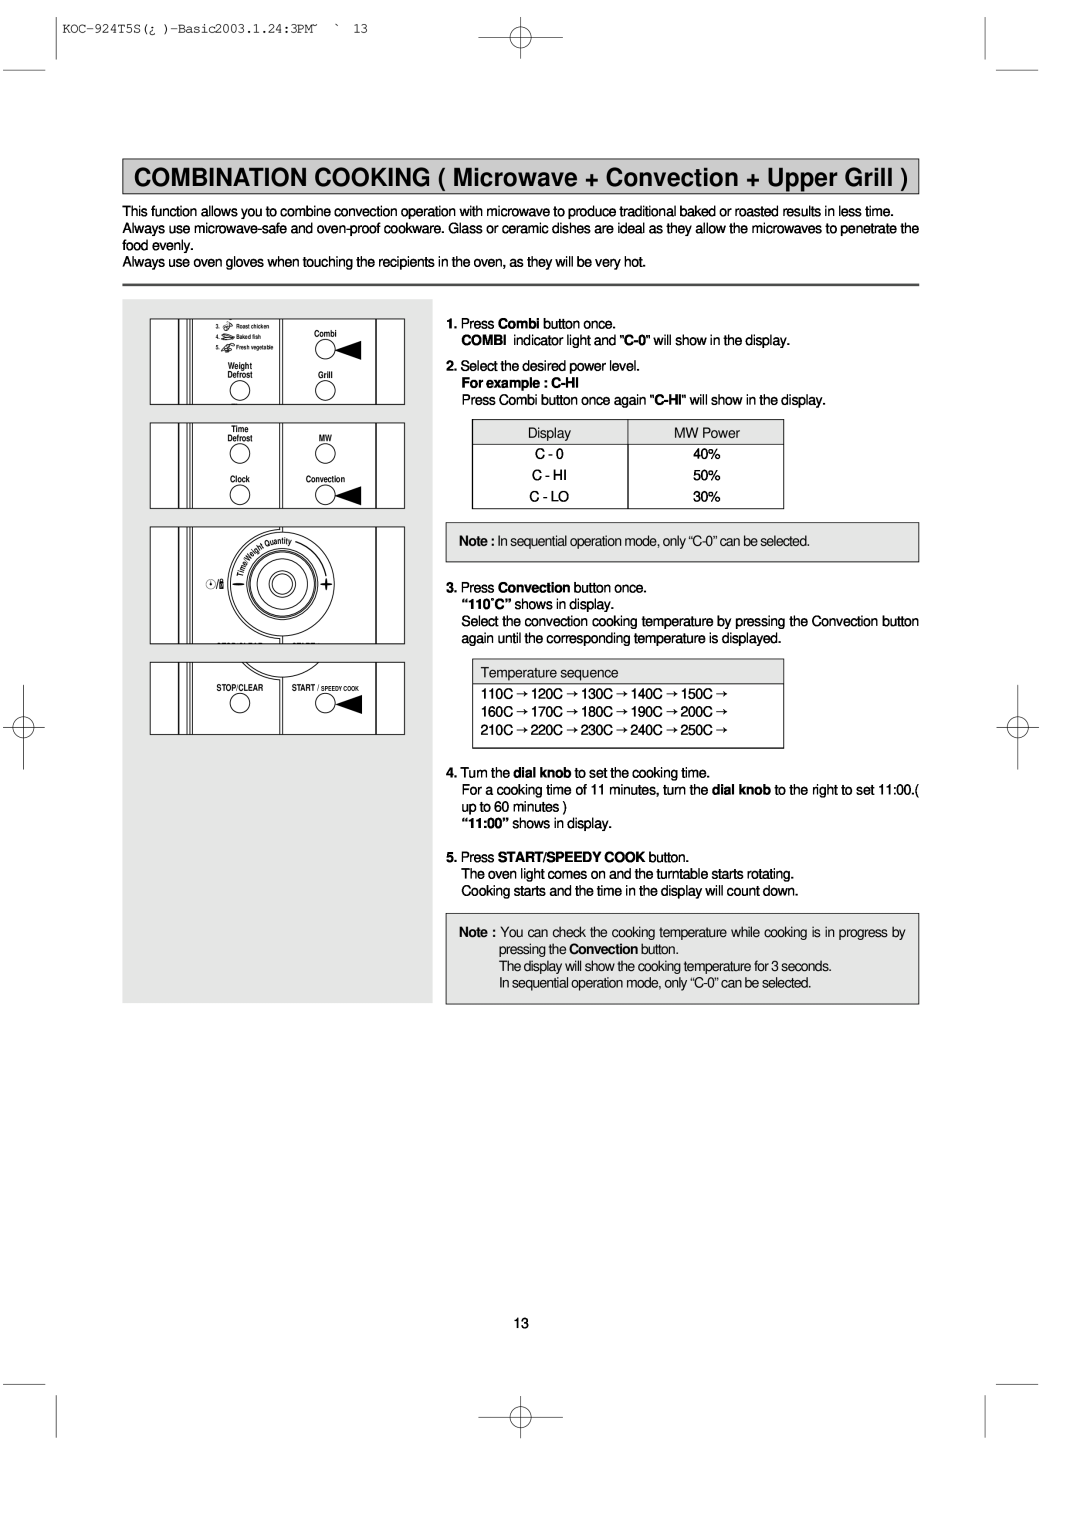 Daewoo KOC-924T0S, KOC-924T5S owner manual For example : C-HI, Press START/SPEEDY COOK button 